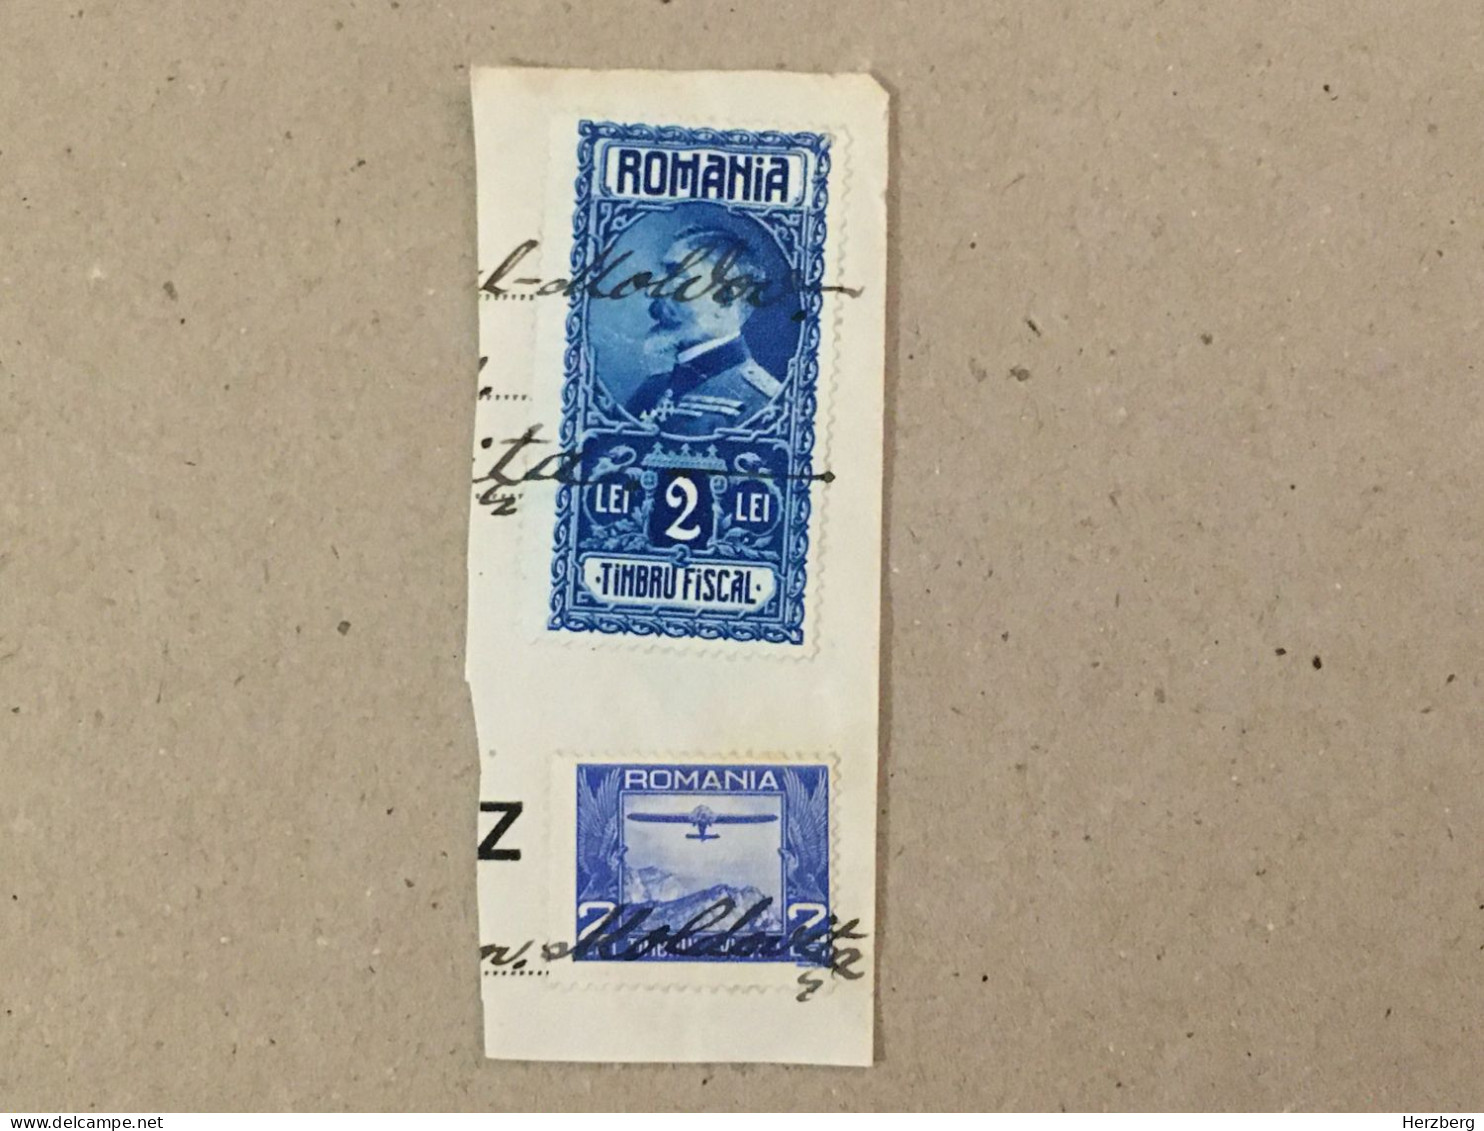 Romania Rumanien Roumanie - Ferdinand Timbru Fiscal Revenue Stamp Aviation Airplane Avion Printed On Document Fragment - Usado